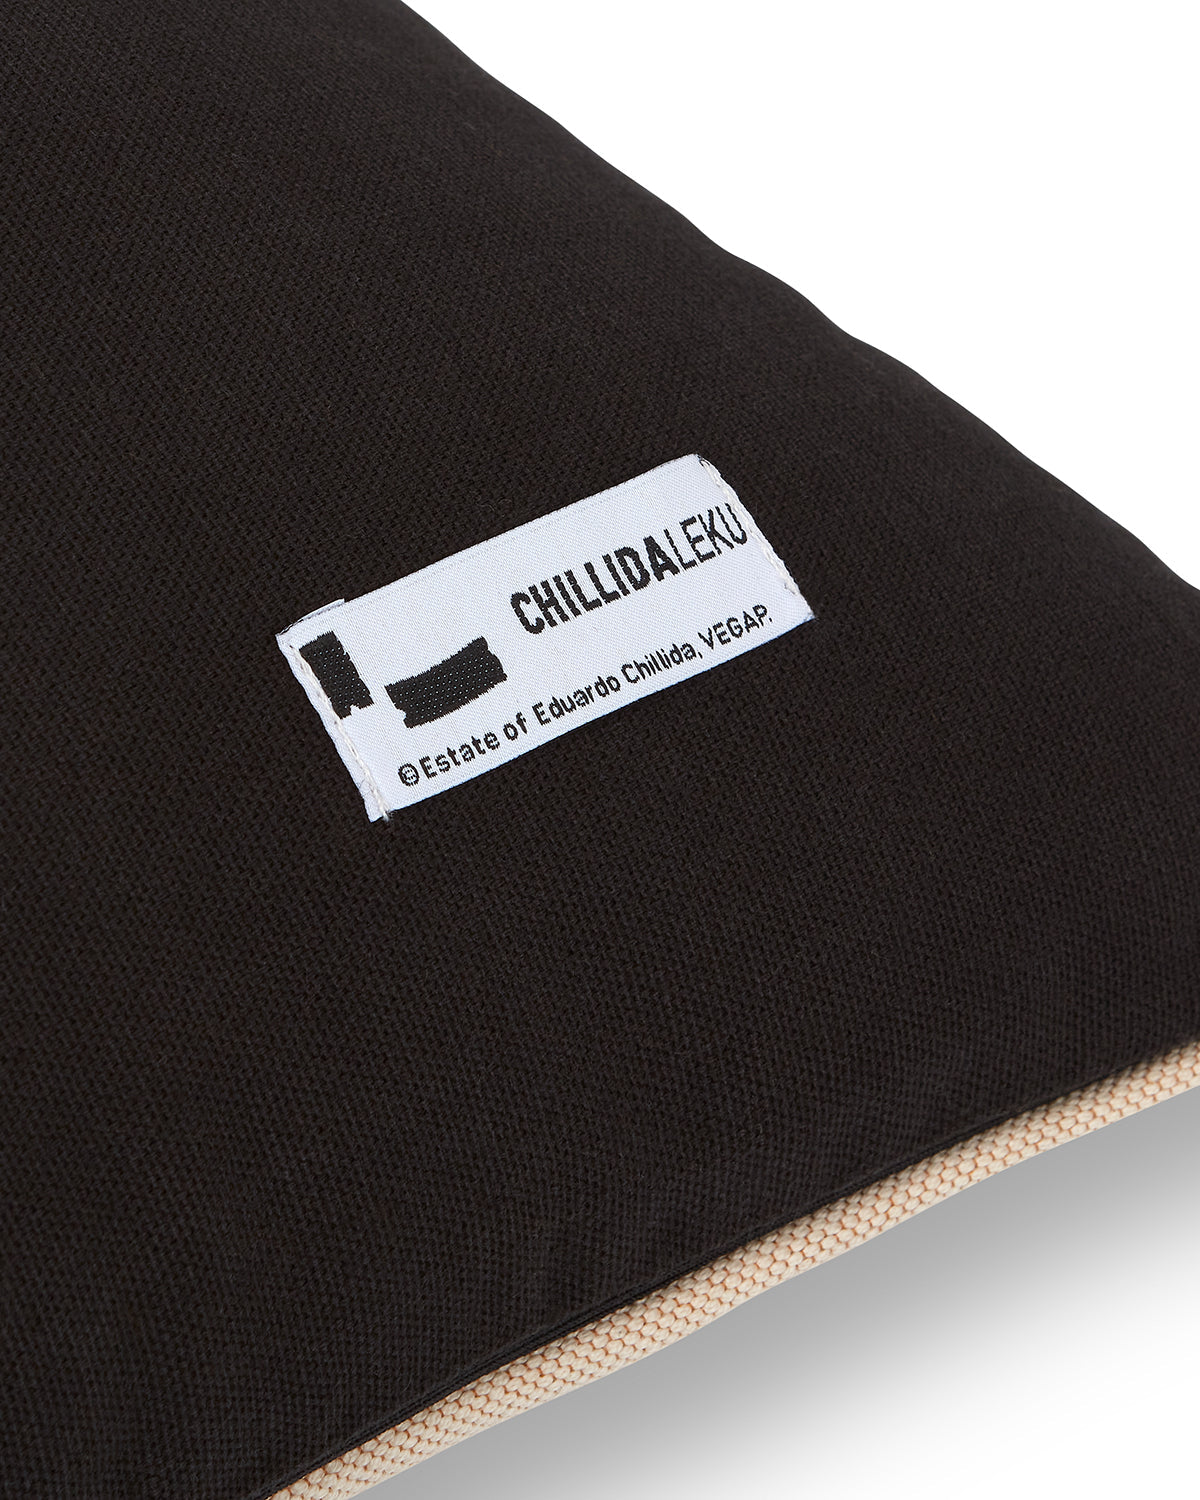 Eduardo Chillida Print Cushion Default Title